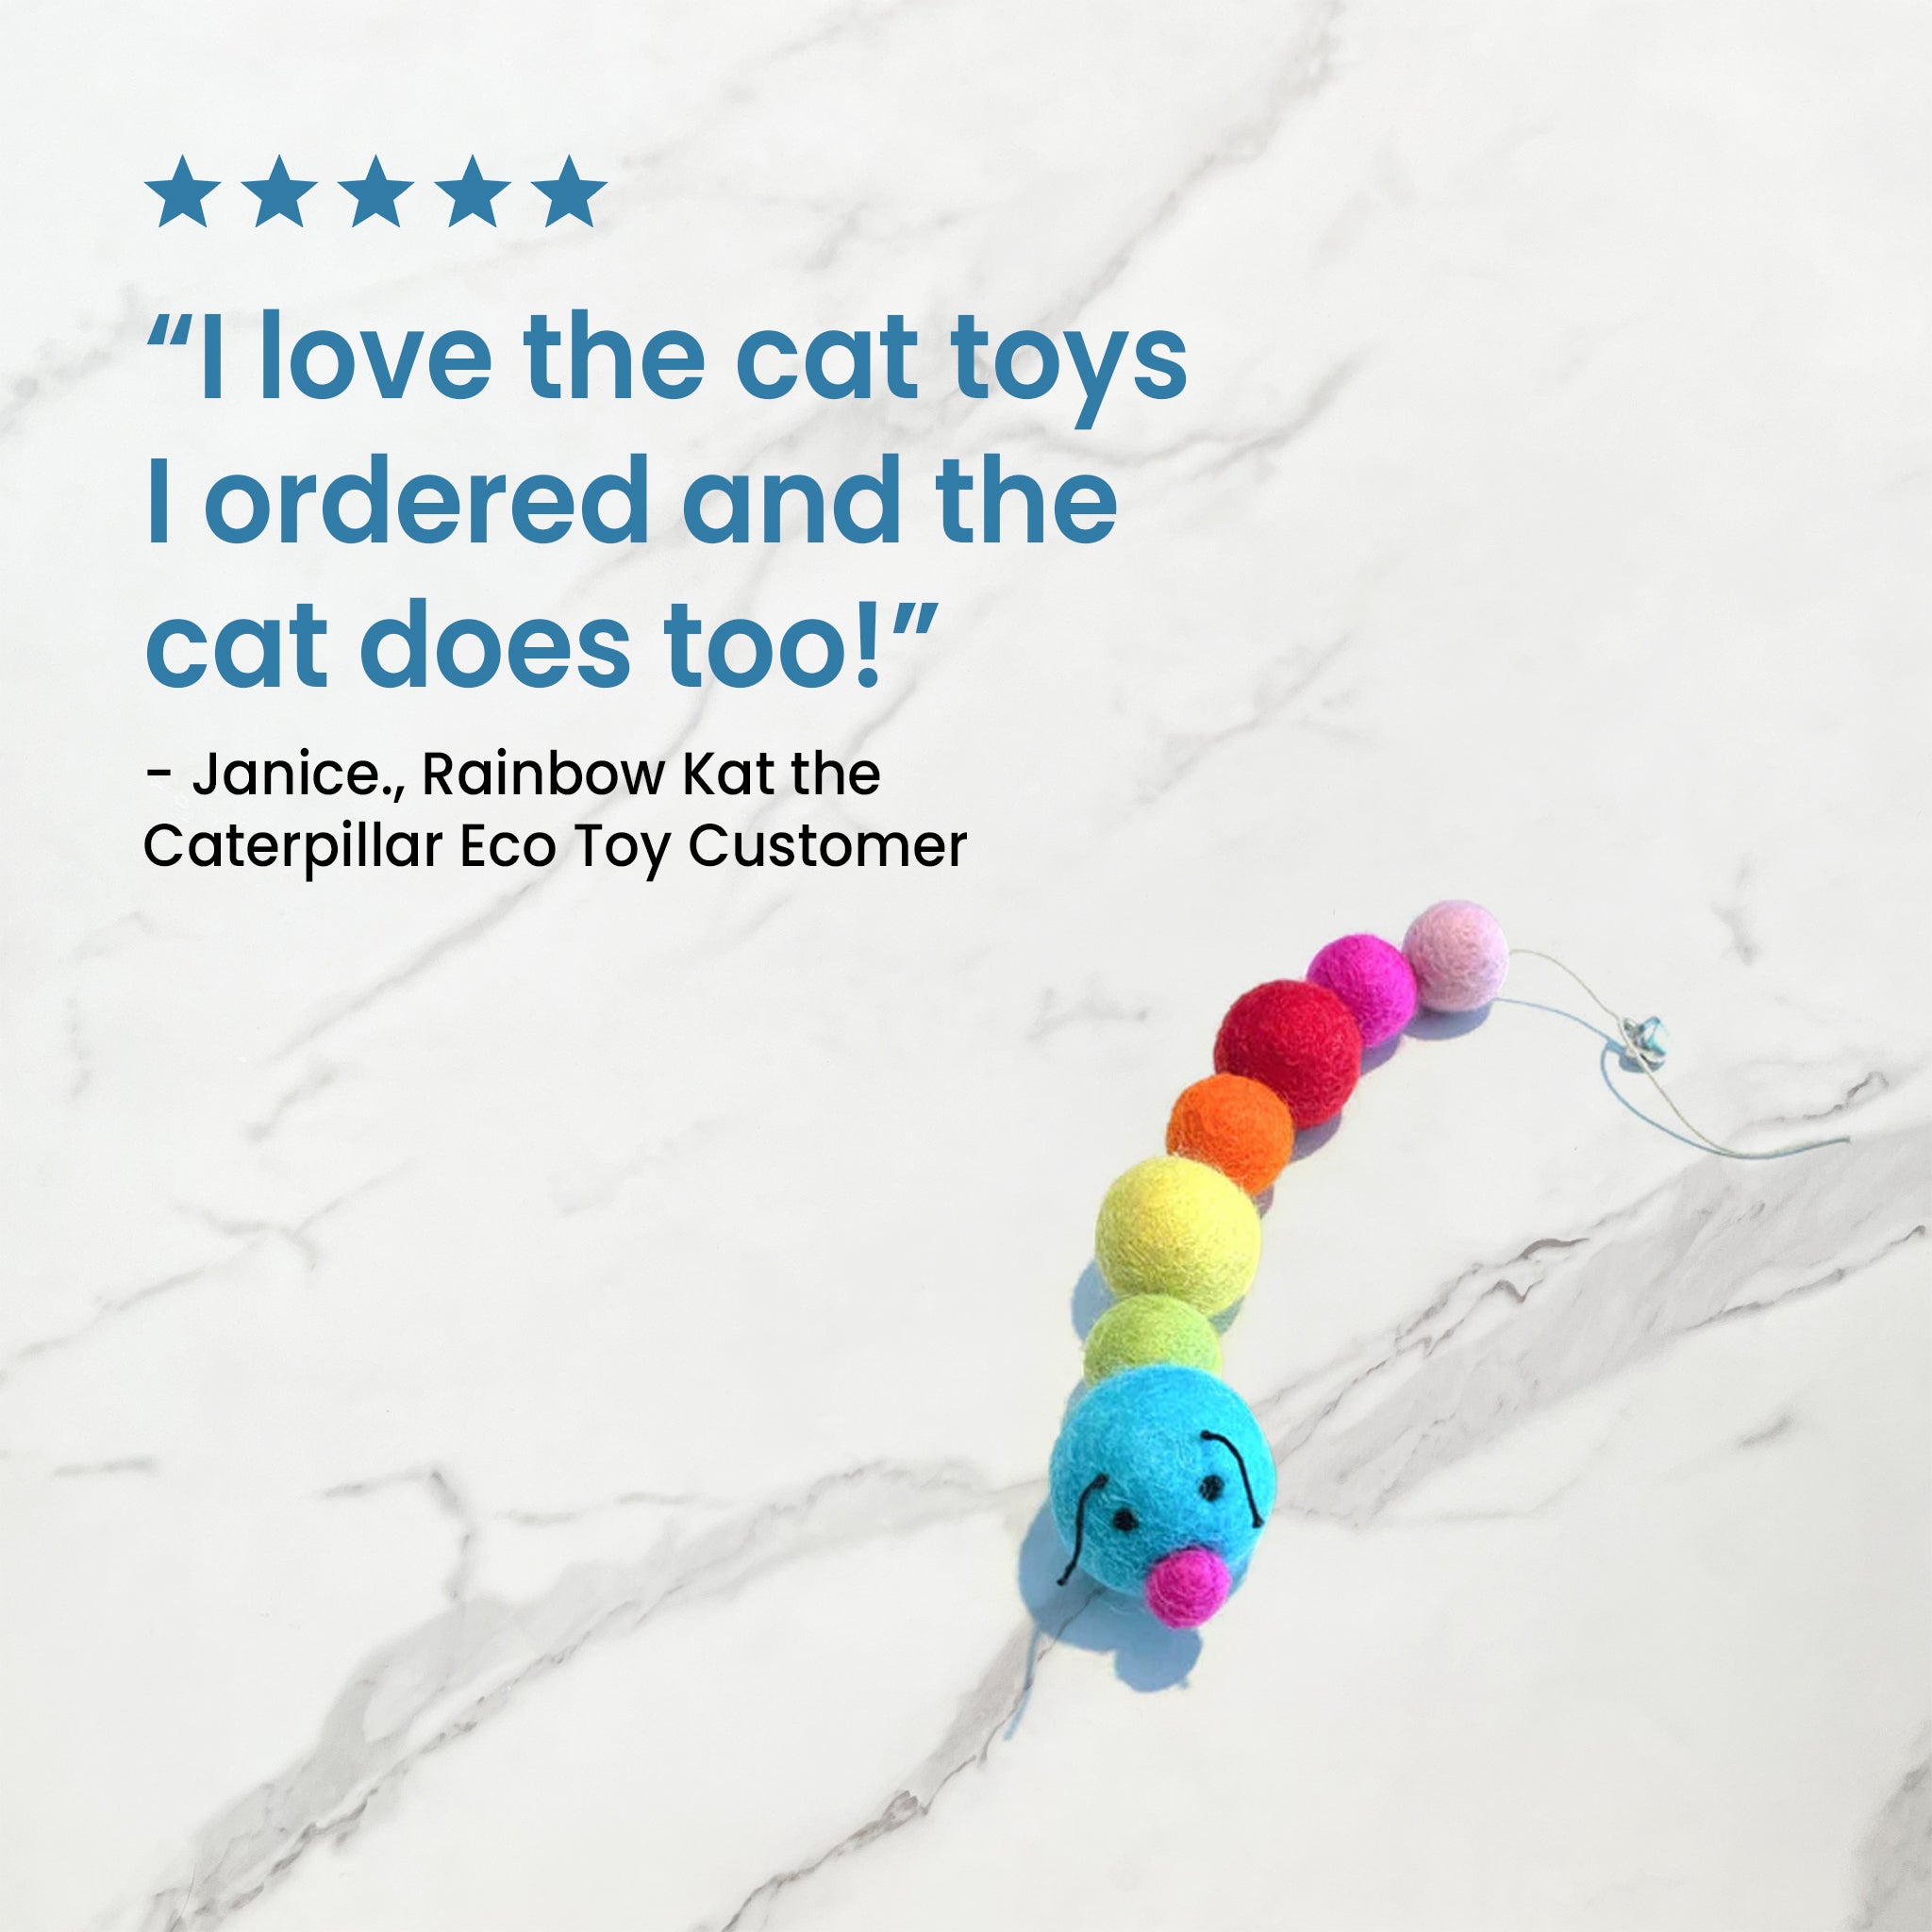 Rainbow Kat the Caterpillar Eco Toy